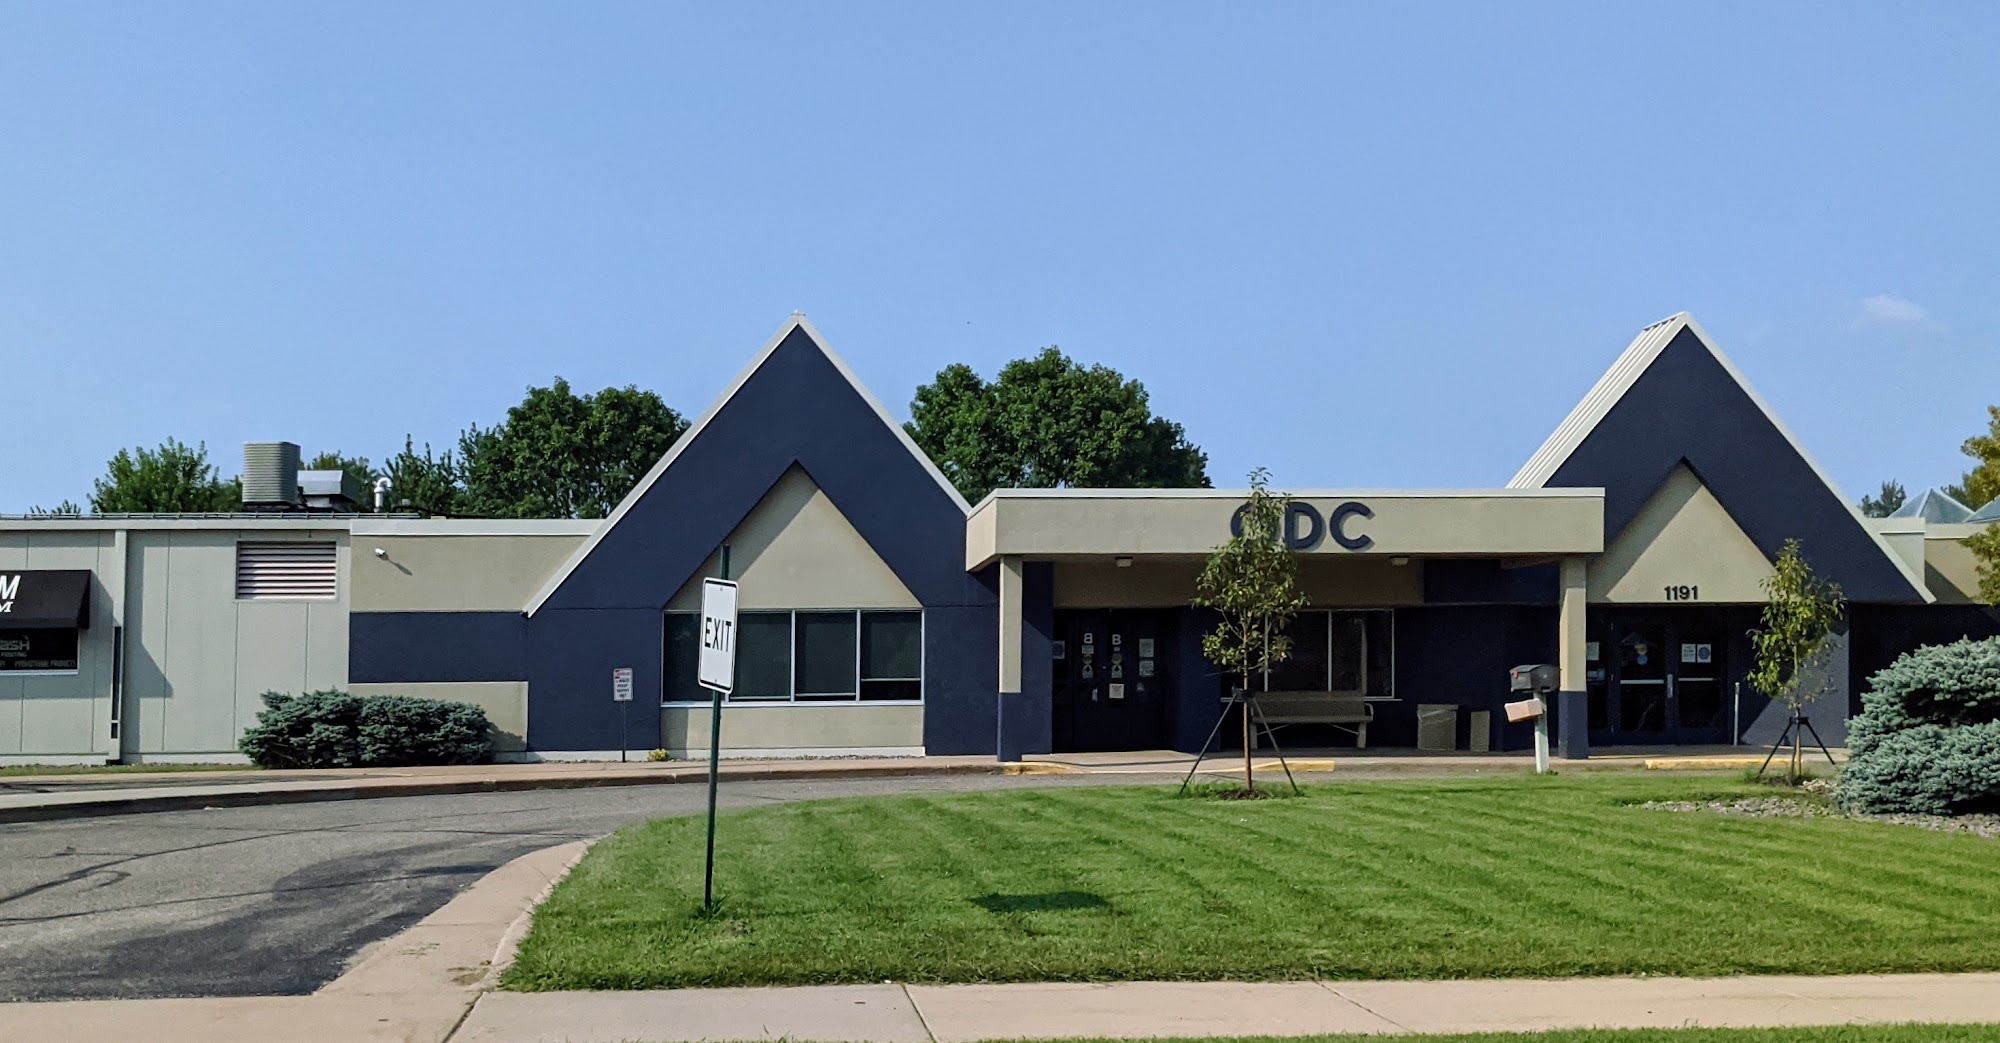 ODC (Opportunity Development Centers, Inc.)